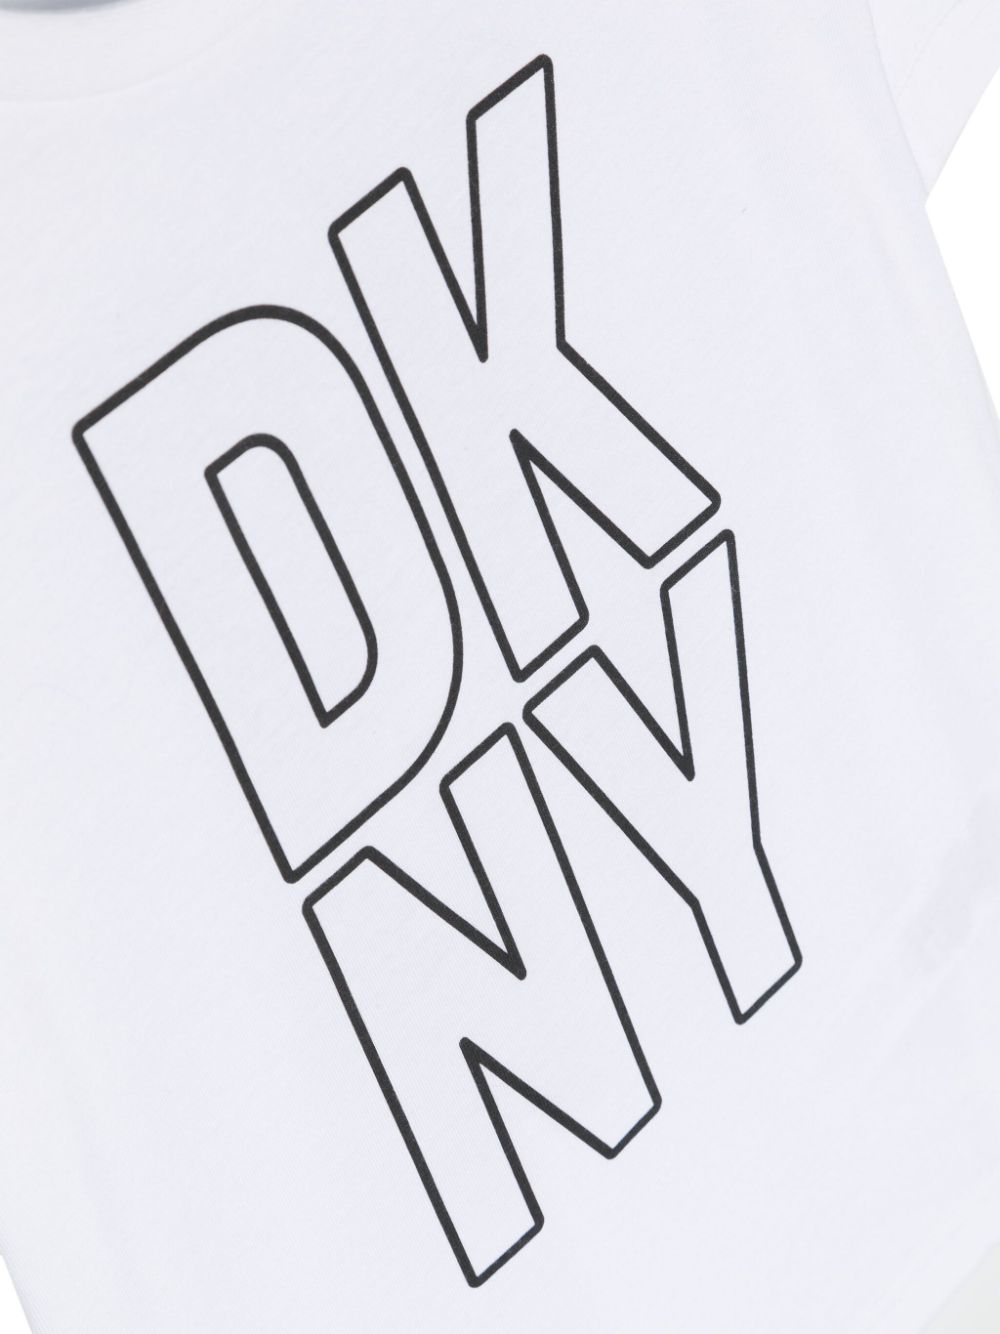 Dkny Kids Katoenen T-shirt met logoprint Wit